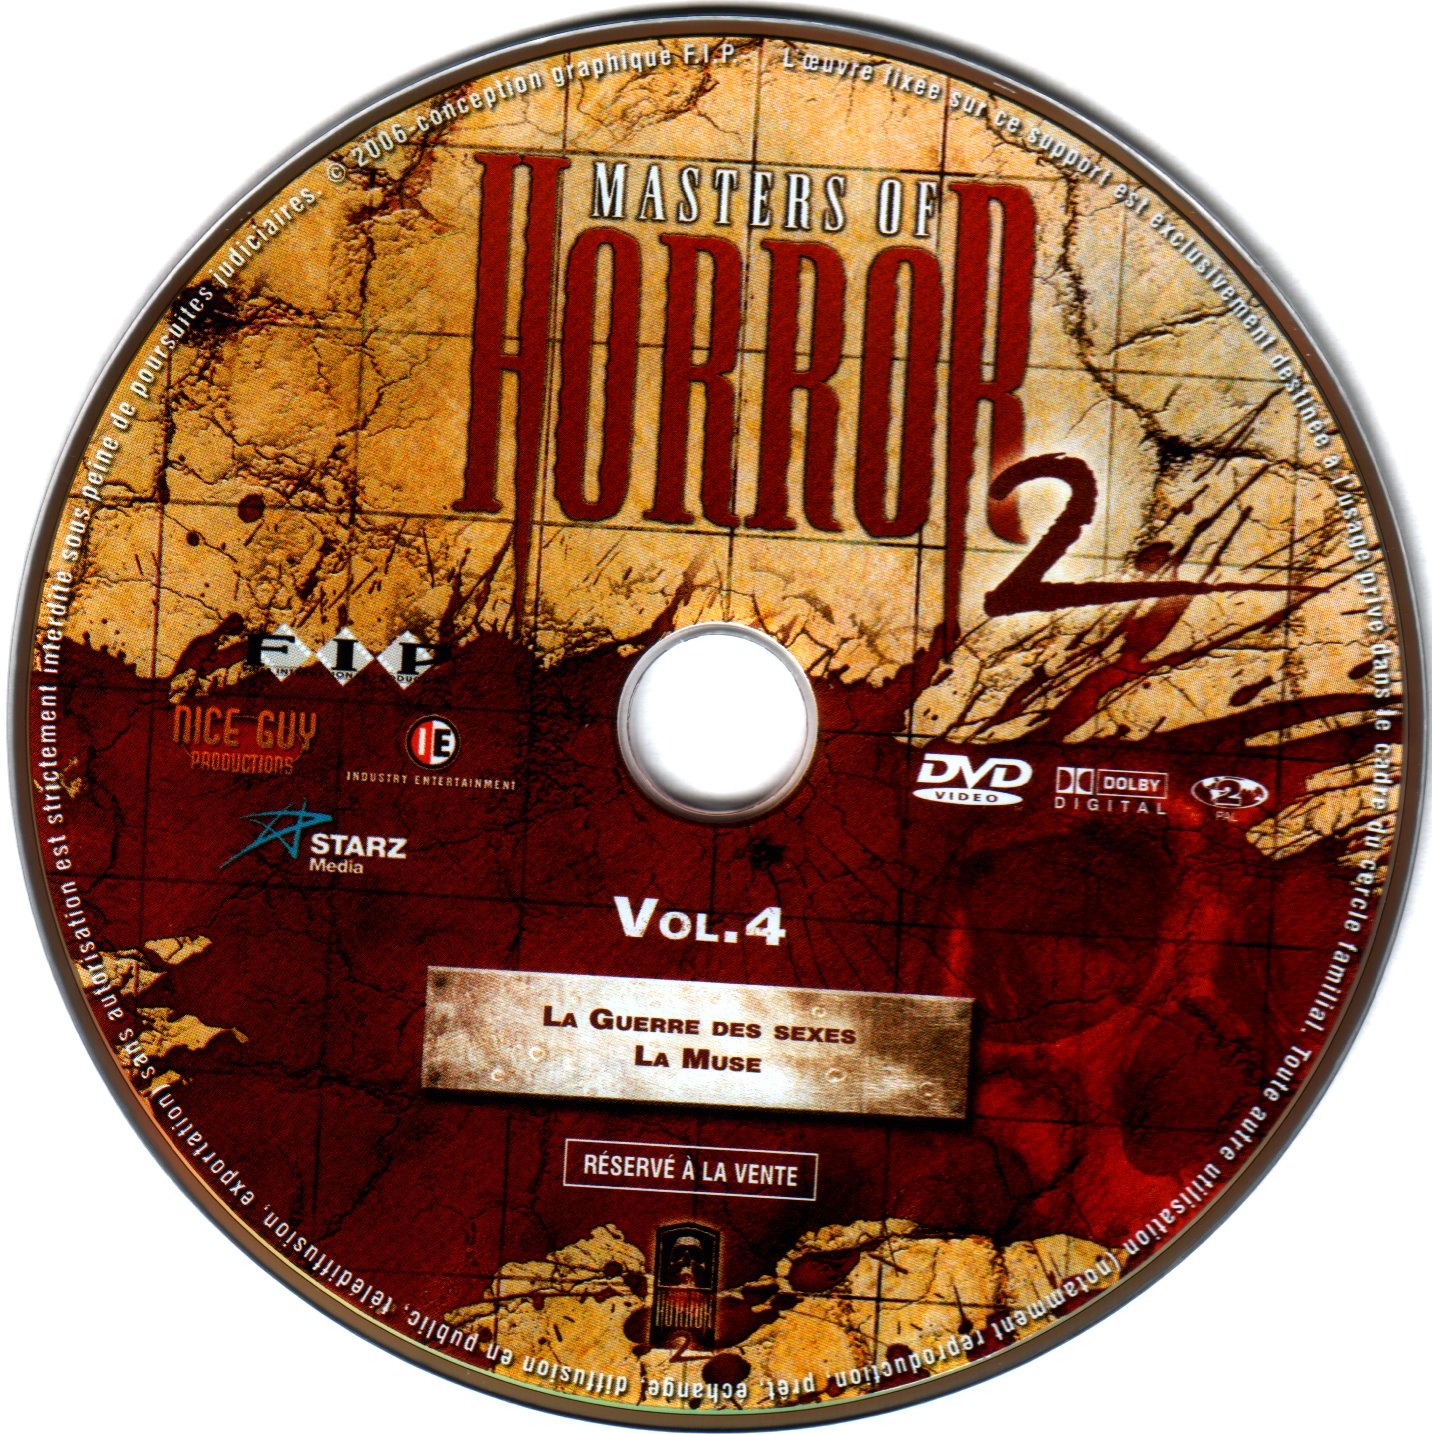 Masters of horror Saison 2 vol 4